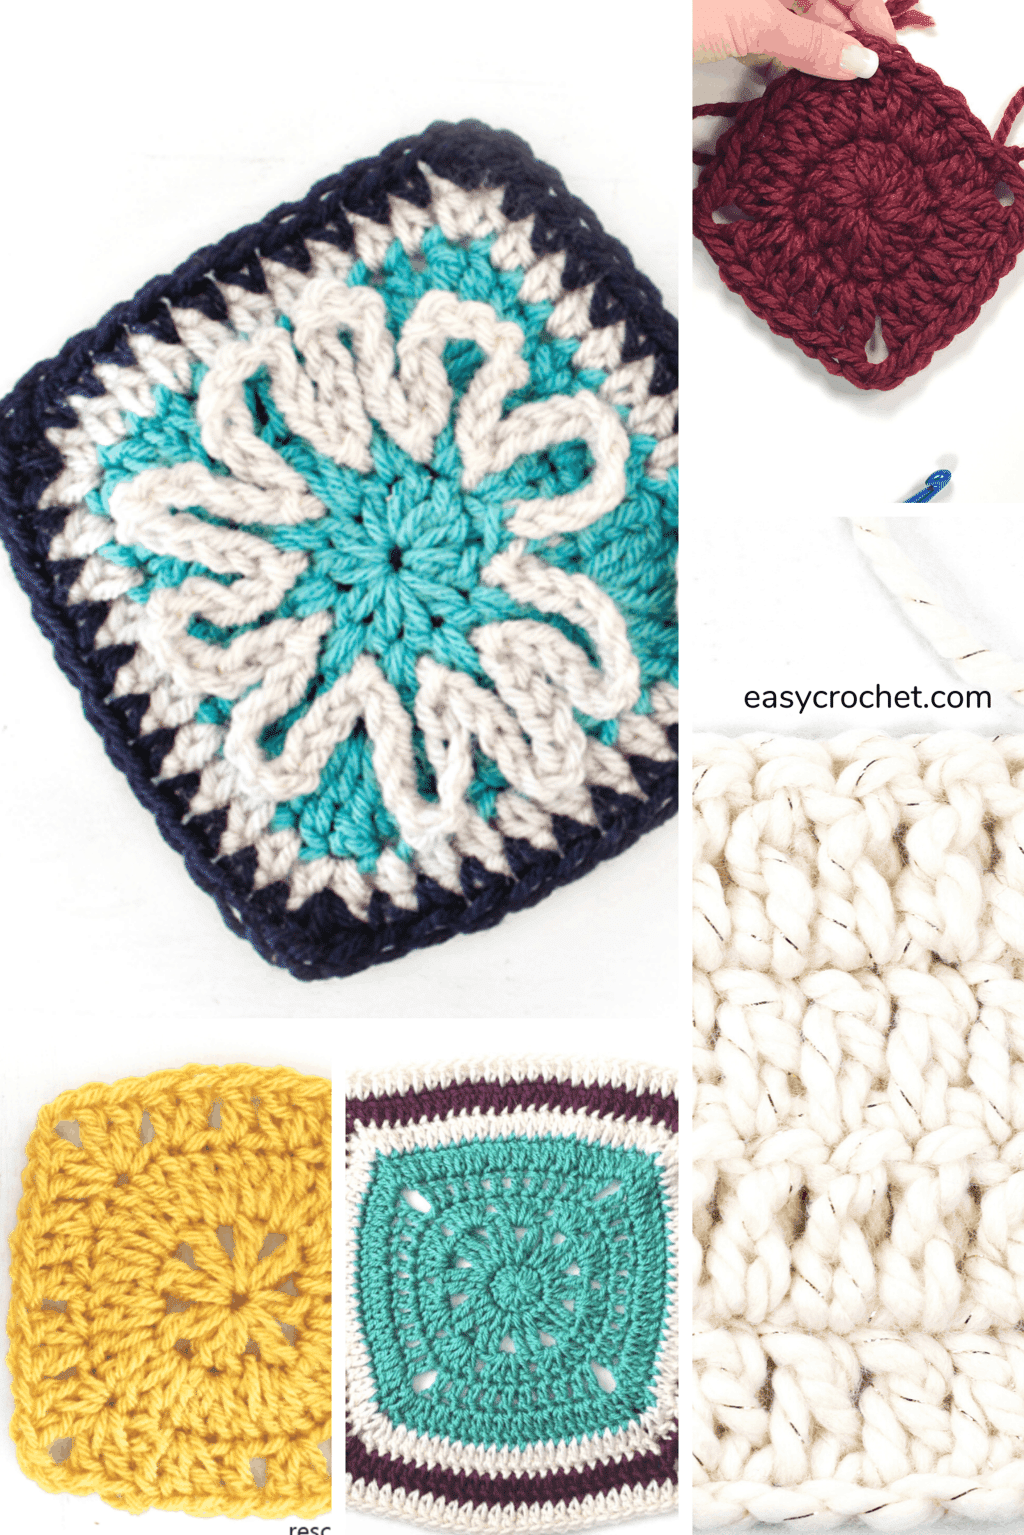 Free Crochet Square Patterns